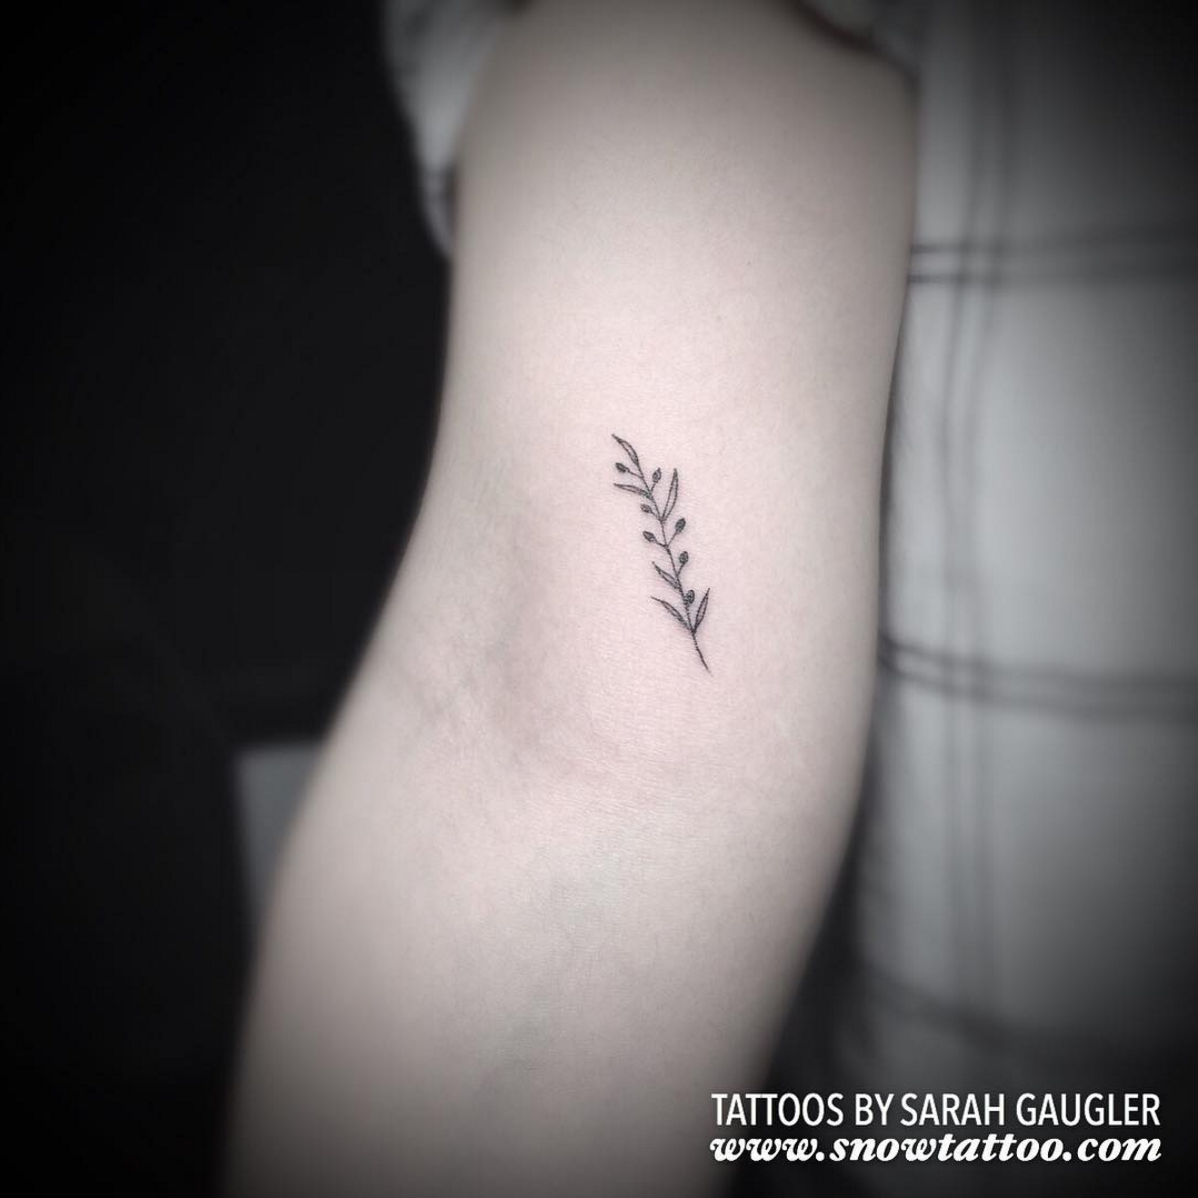 Sarah Gaugler Snow Tattoo Custom Olive Twig Detailed FineLineTattoo Fine Line New York Best Tattoos Best Tattoo Artist NYC.png